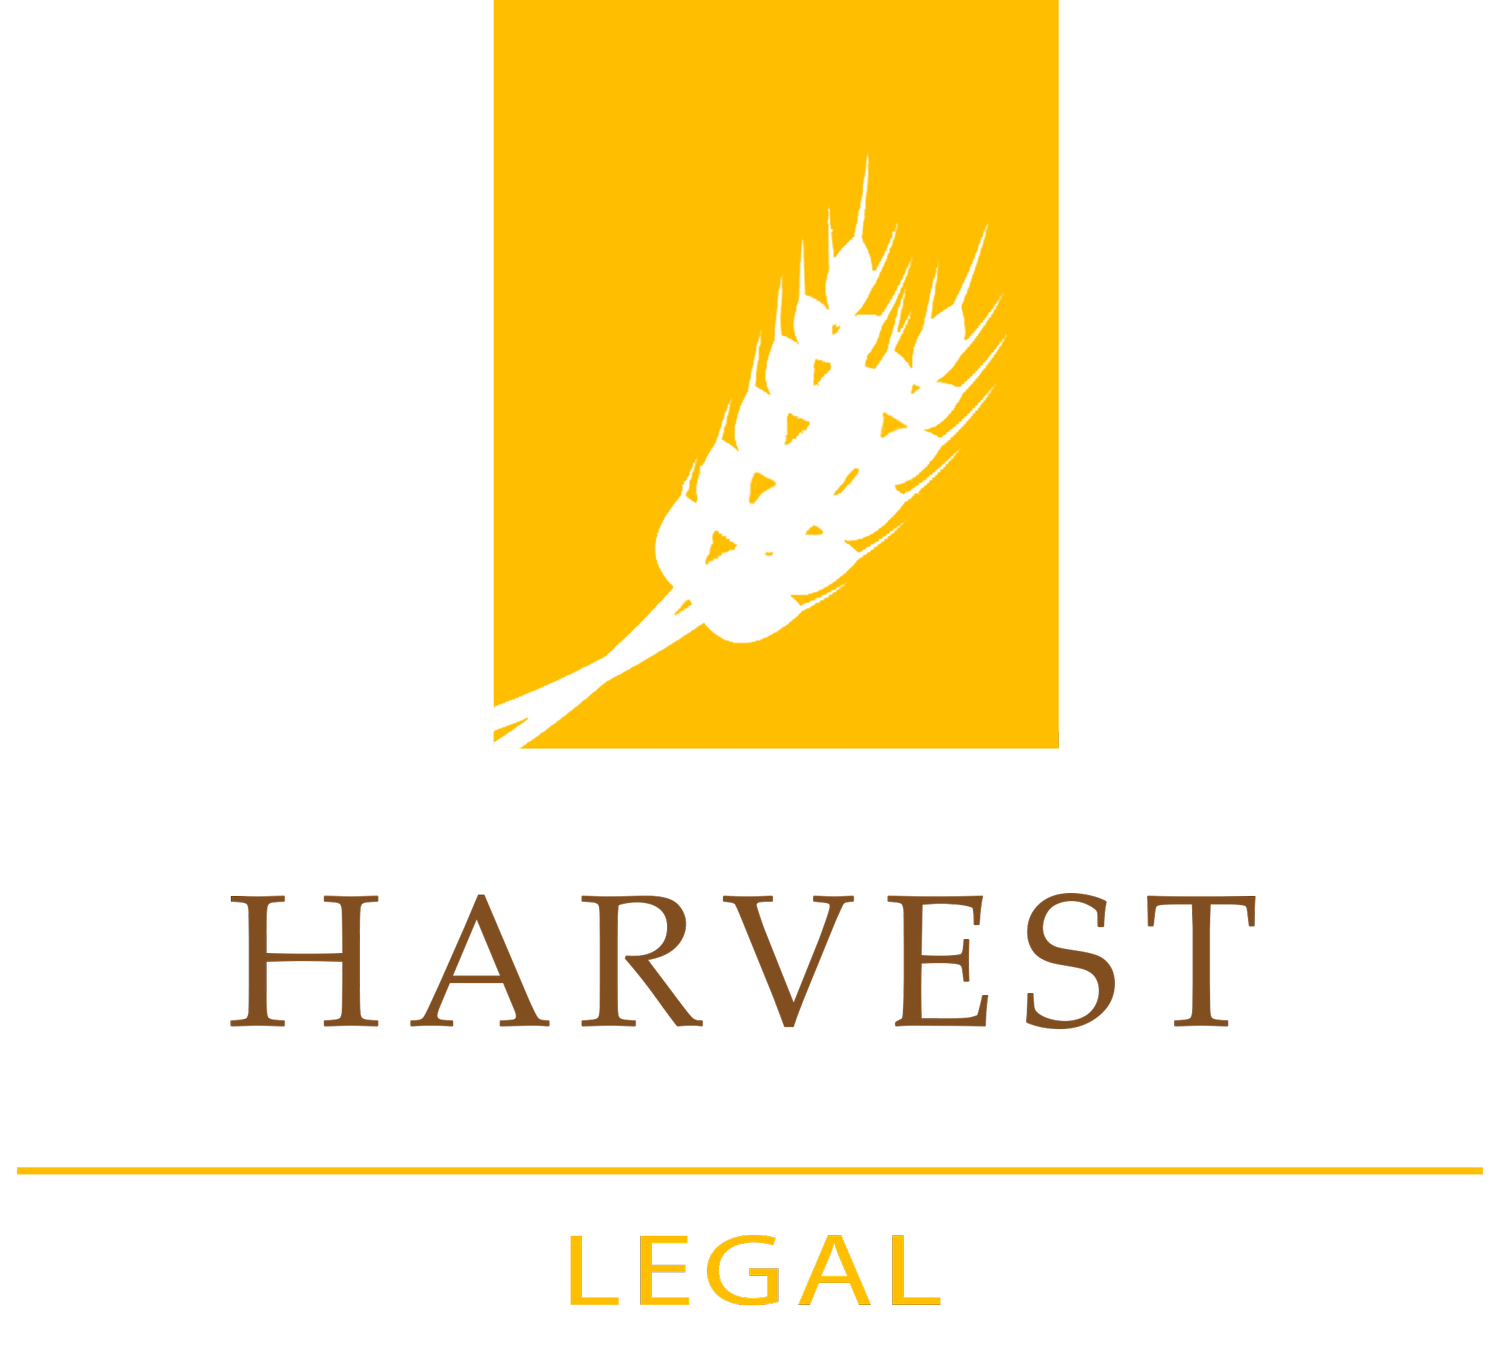 Harvest Legal